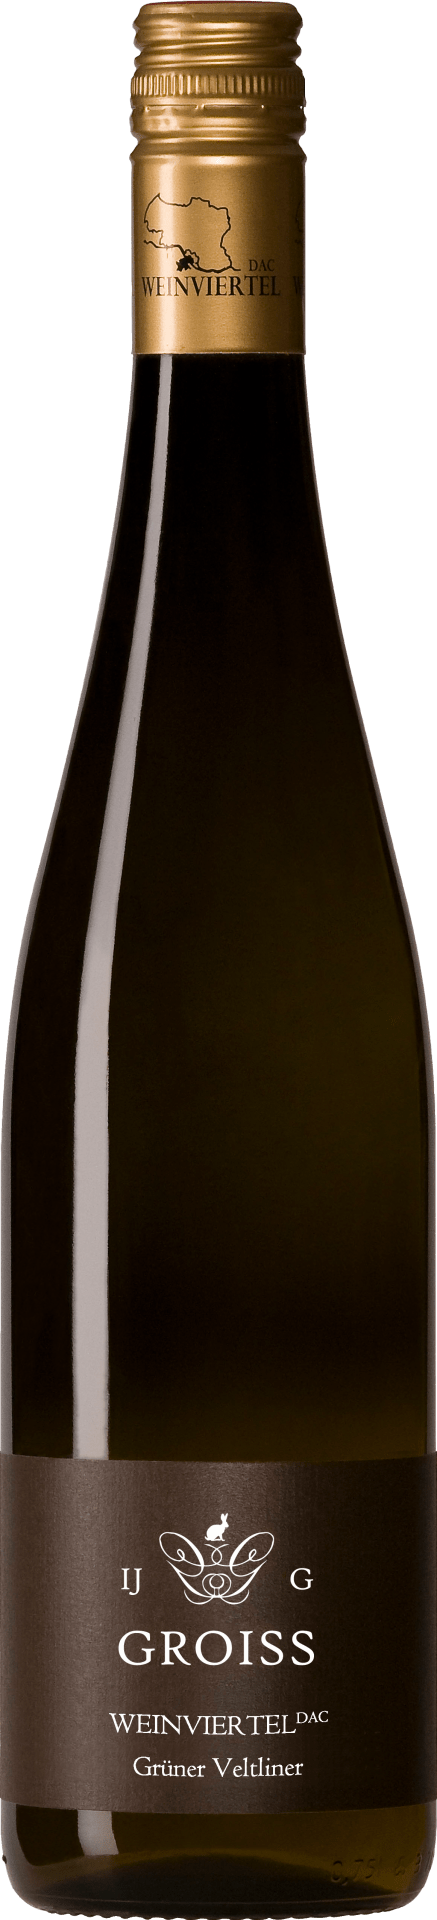 Grüner Veltliner Weinviertel Ingrid Groiss